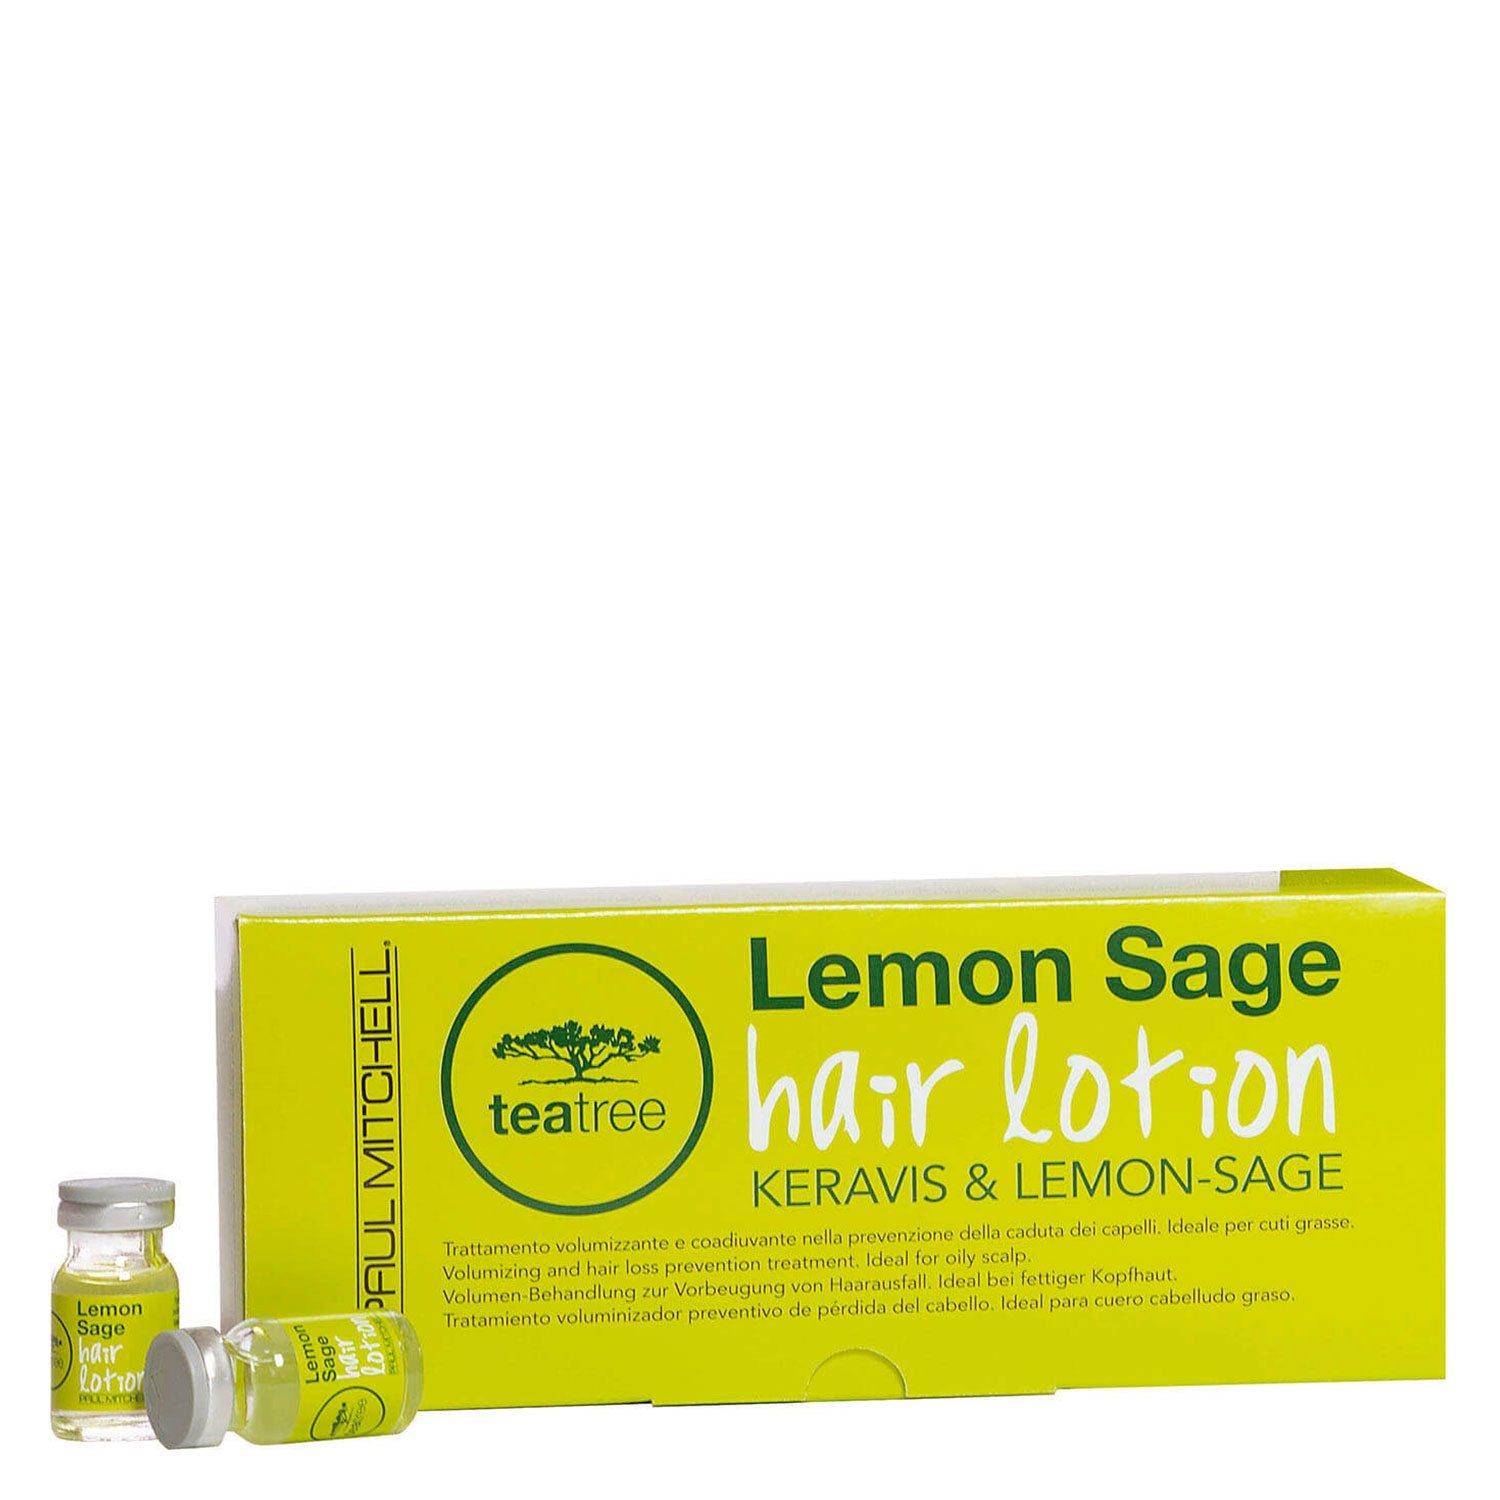 Produktbild von Tea Tree Lemon Sage - Hair Lotion